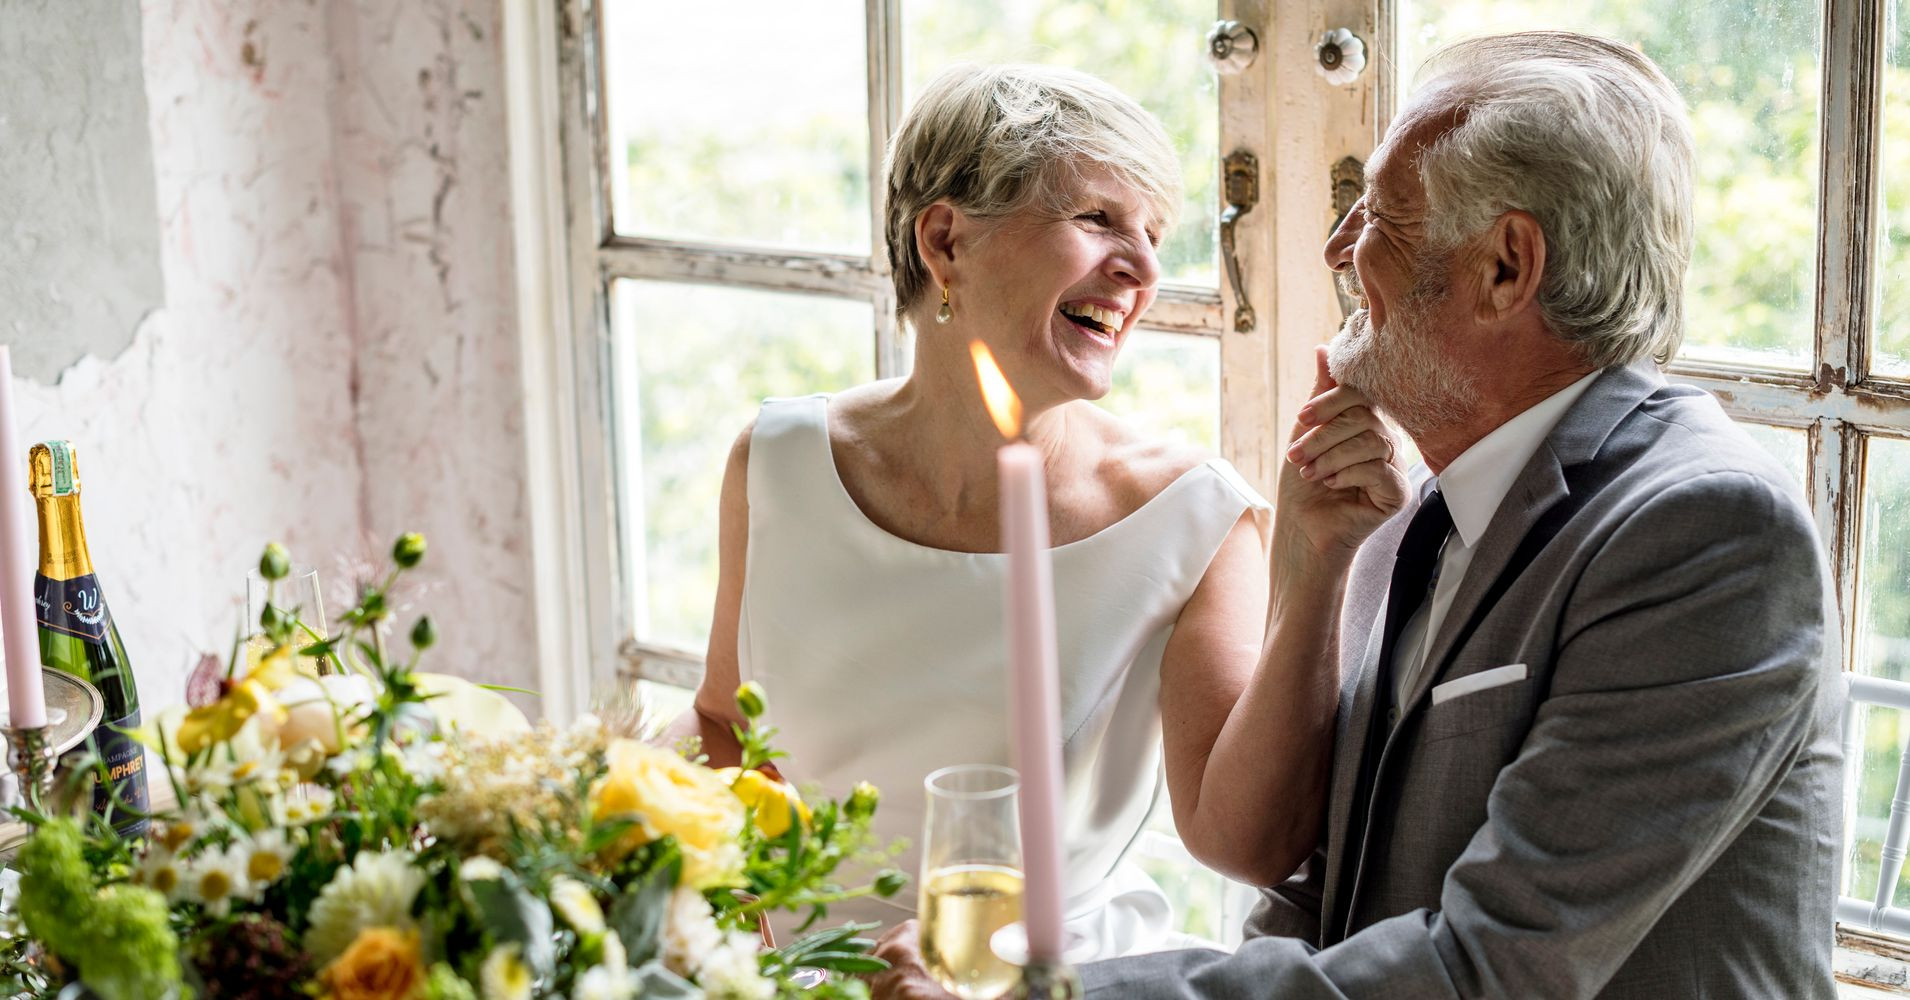 Gift Ideas For Older Couples
 20 Best Wedding Gift Ideas for Older Couples Second